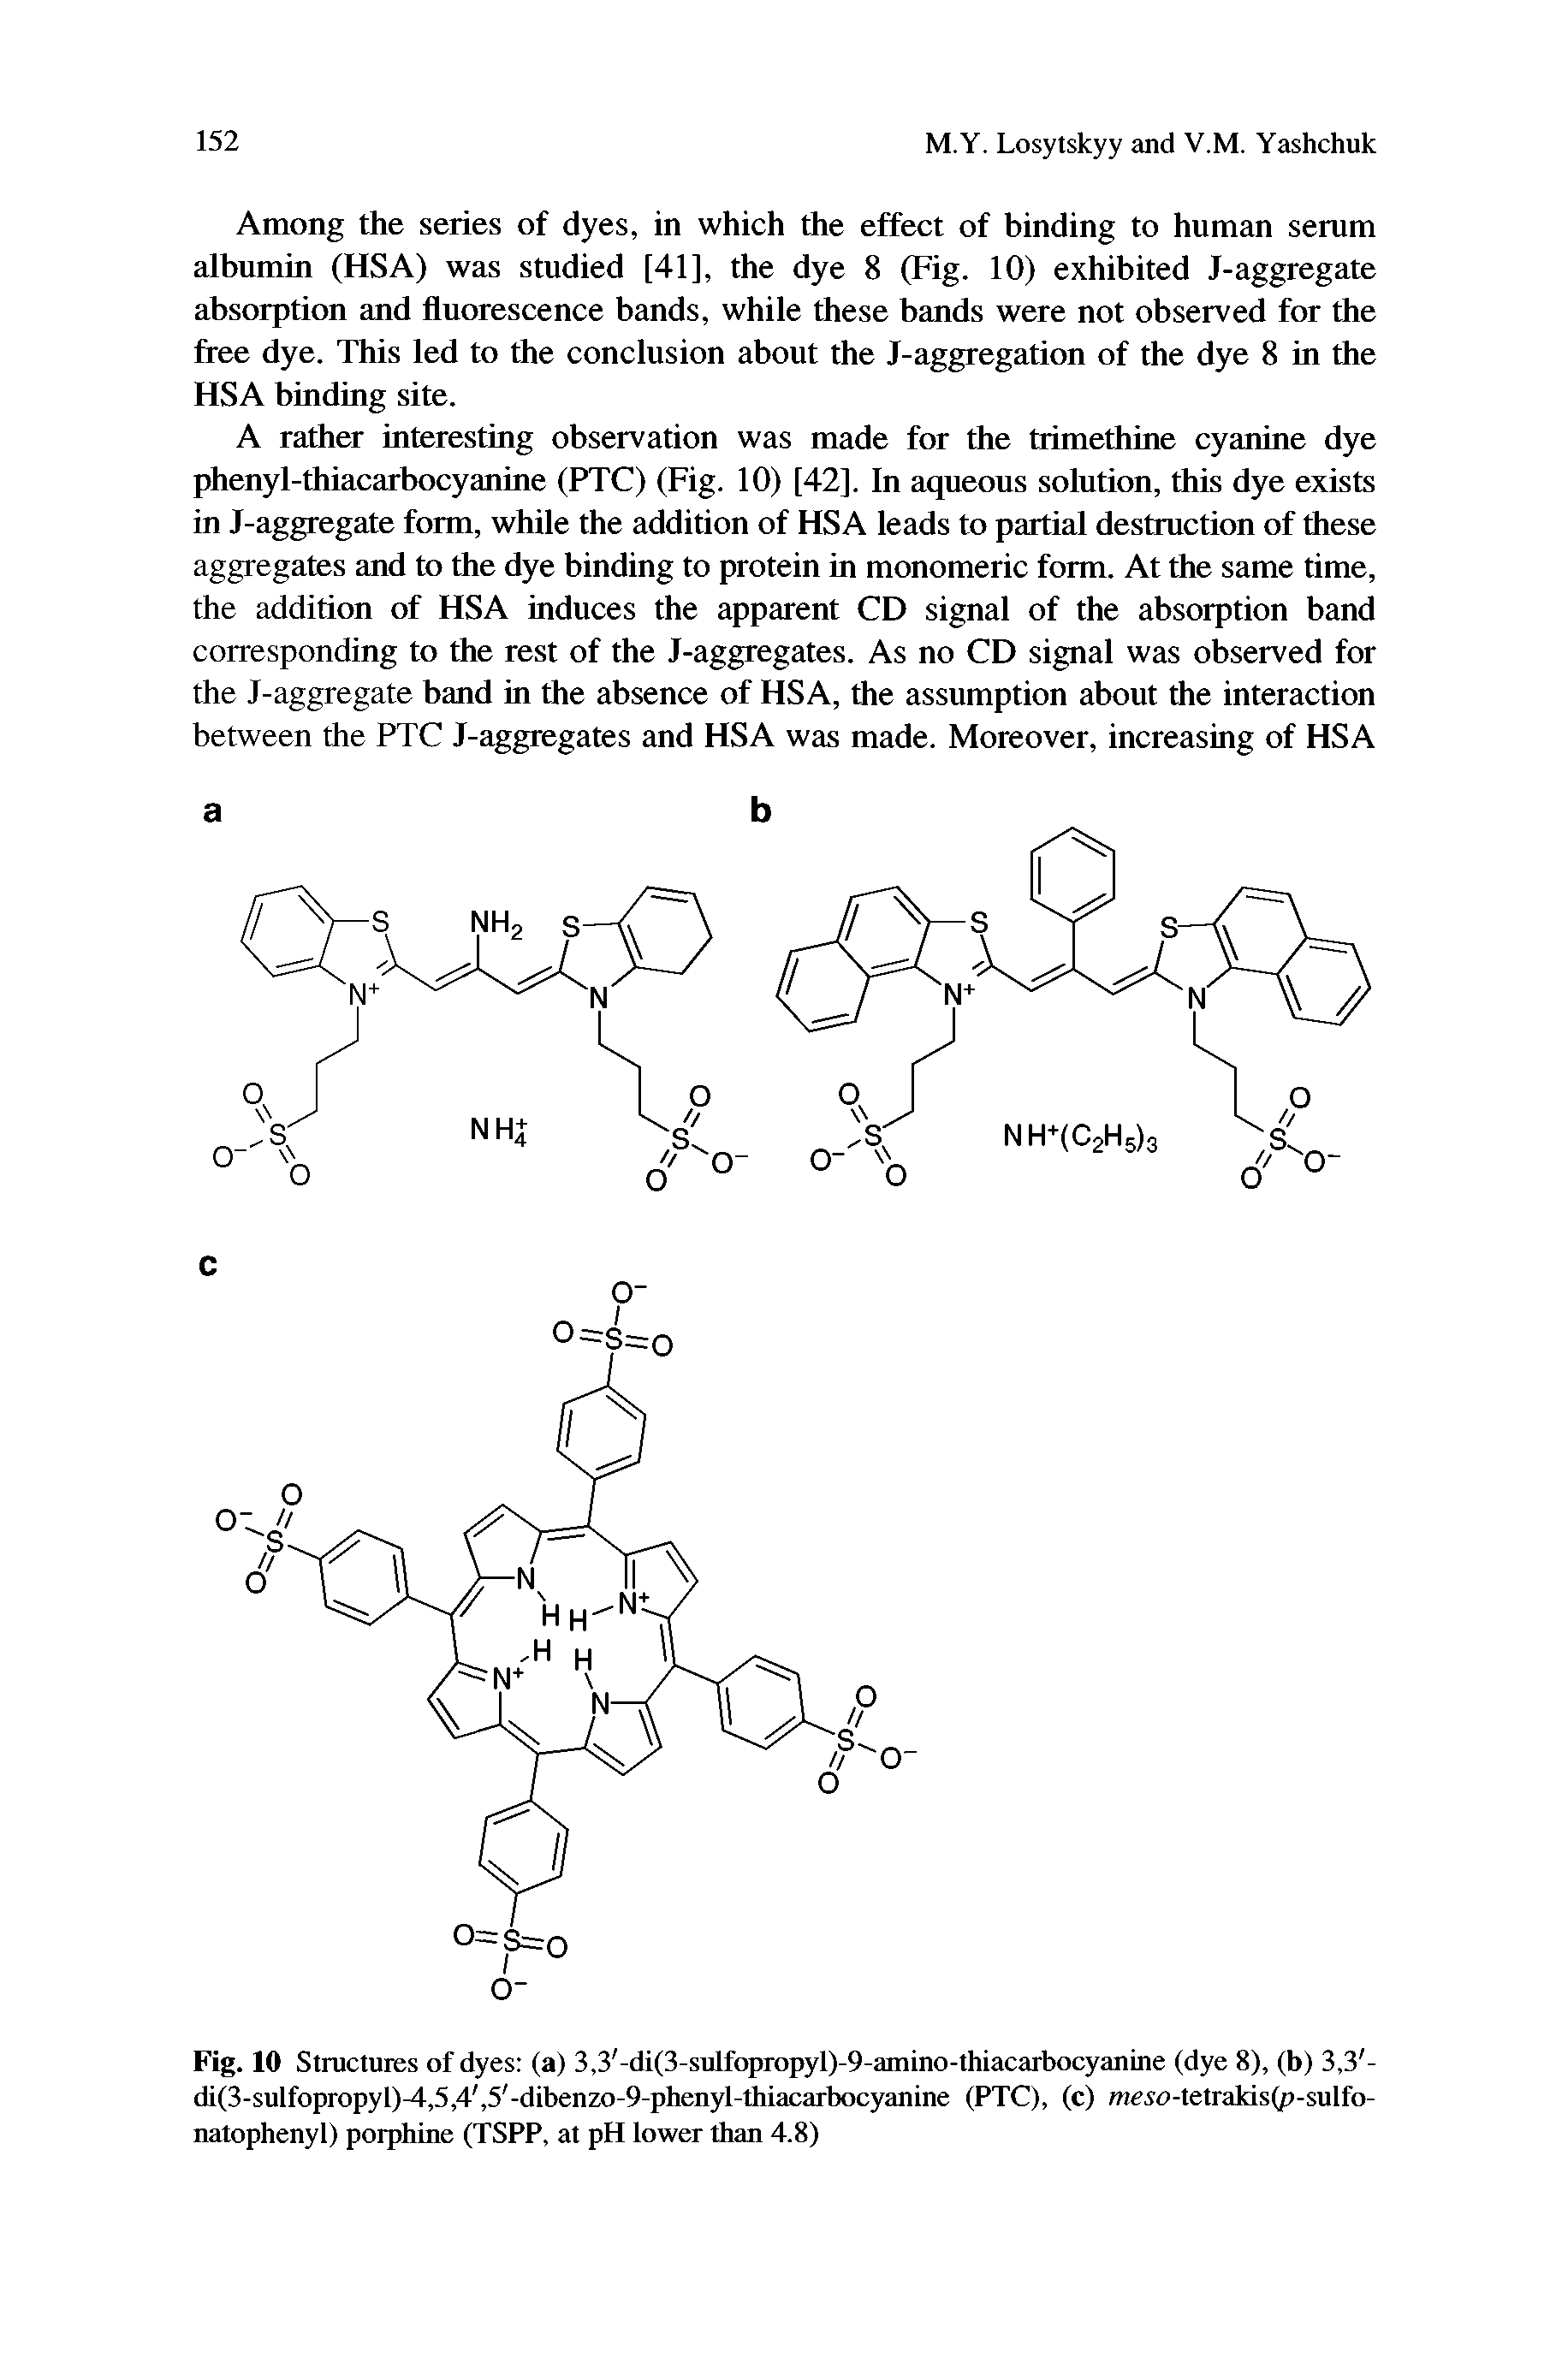 Fig. 10 Structures of dyes (a) 3,3 -di(3-sulfopropyl)-9-amino-thiacarbocyanine (dye 8), (b) 3,3 -di(3-sulfopropyl)-4,5,4, 5 -dibenzo-9-phcnyl-thiacarbocyanine (PTC), (c) meso-tetrakis(p-sulfo-natophenyl) porphine (TSPP, at pH lower than 4.8)...